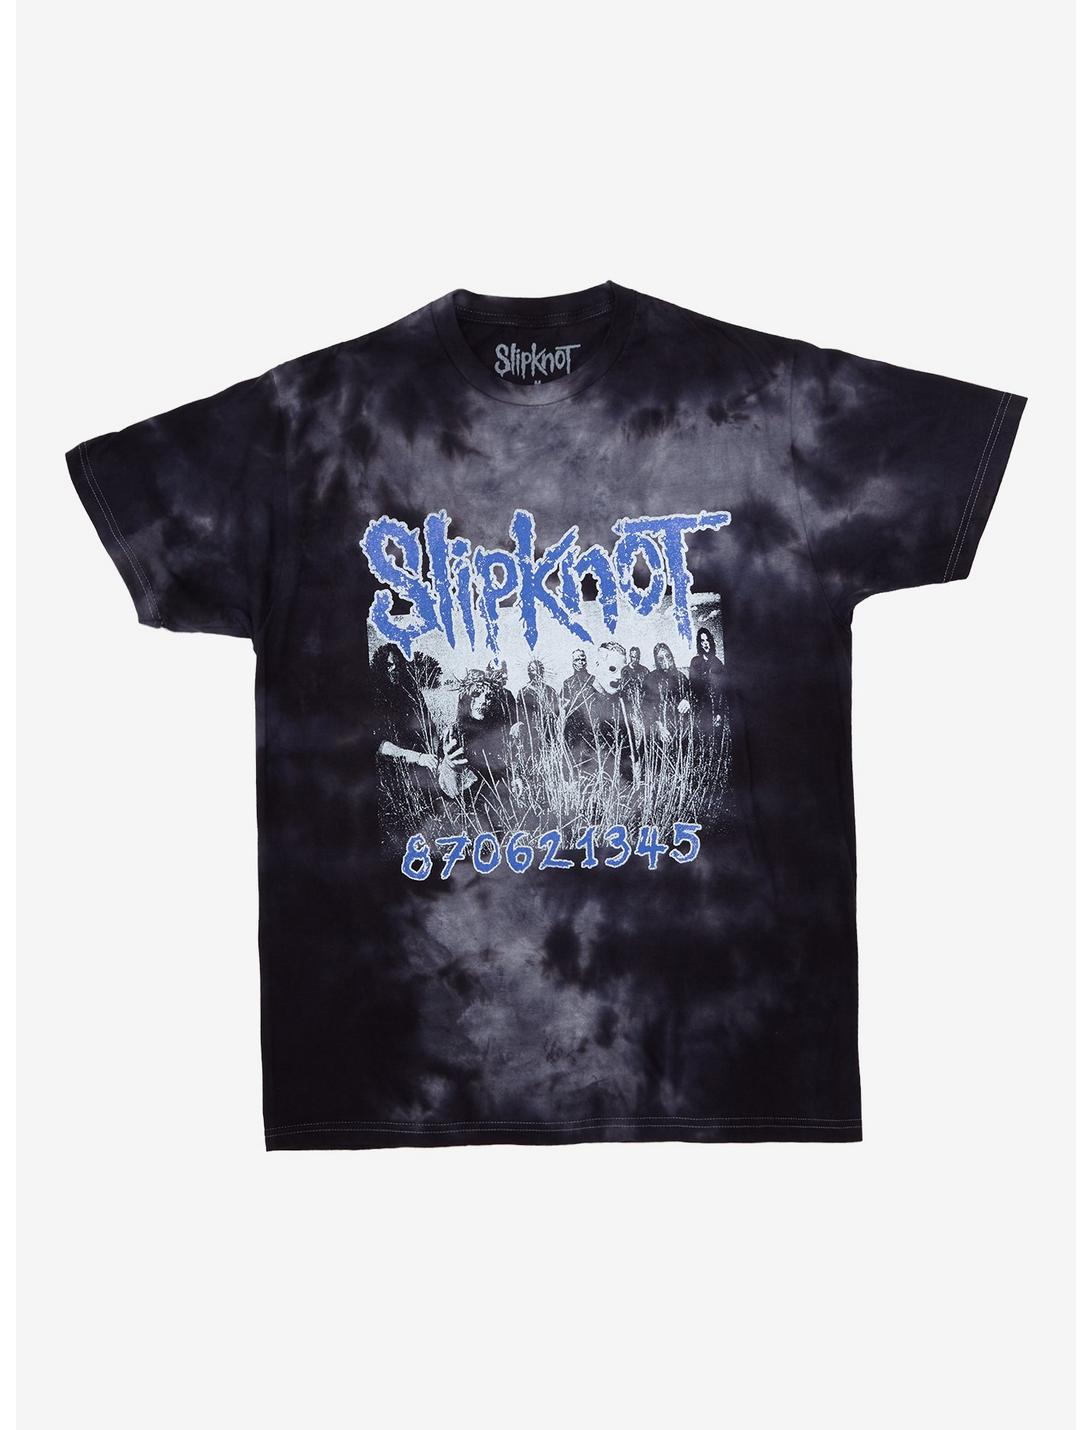 Slipknot 870621345 Tie-Dye T-Shirt, BLACK, hi-res